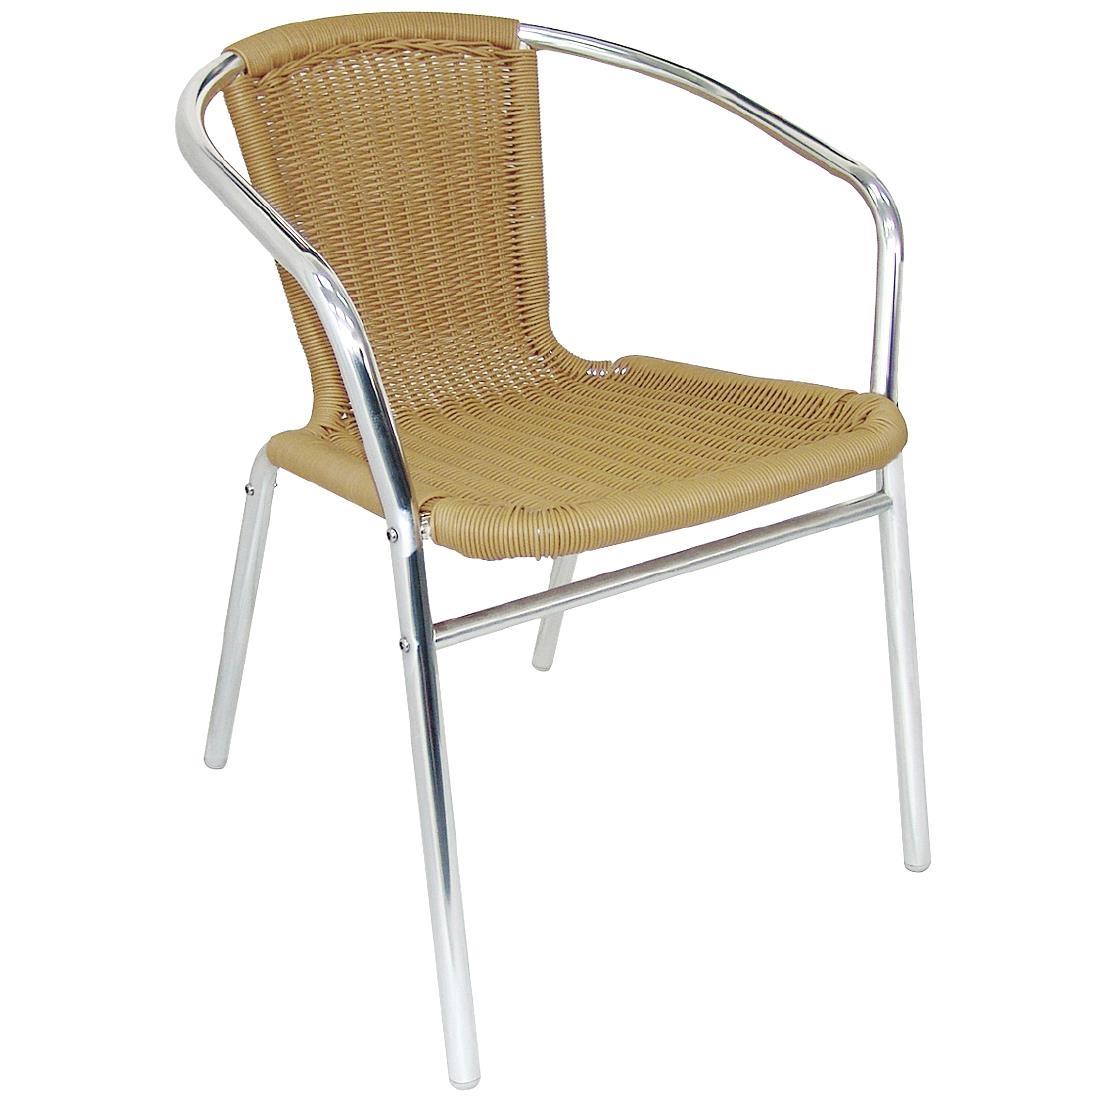 Bolero Aluminium and Natural Wicker Chair (Pack of 4) - U422  - 2